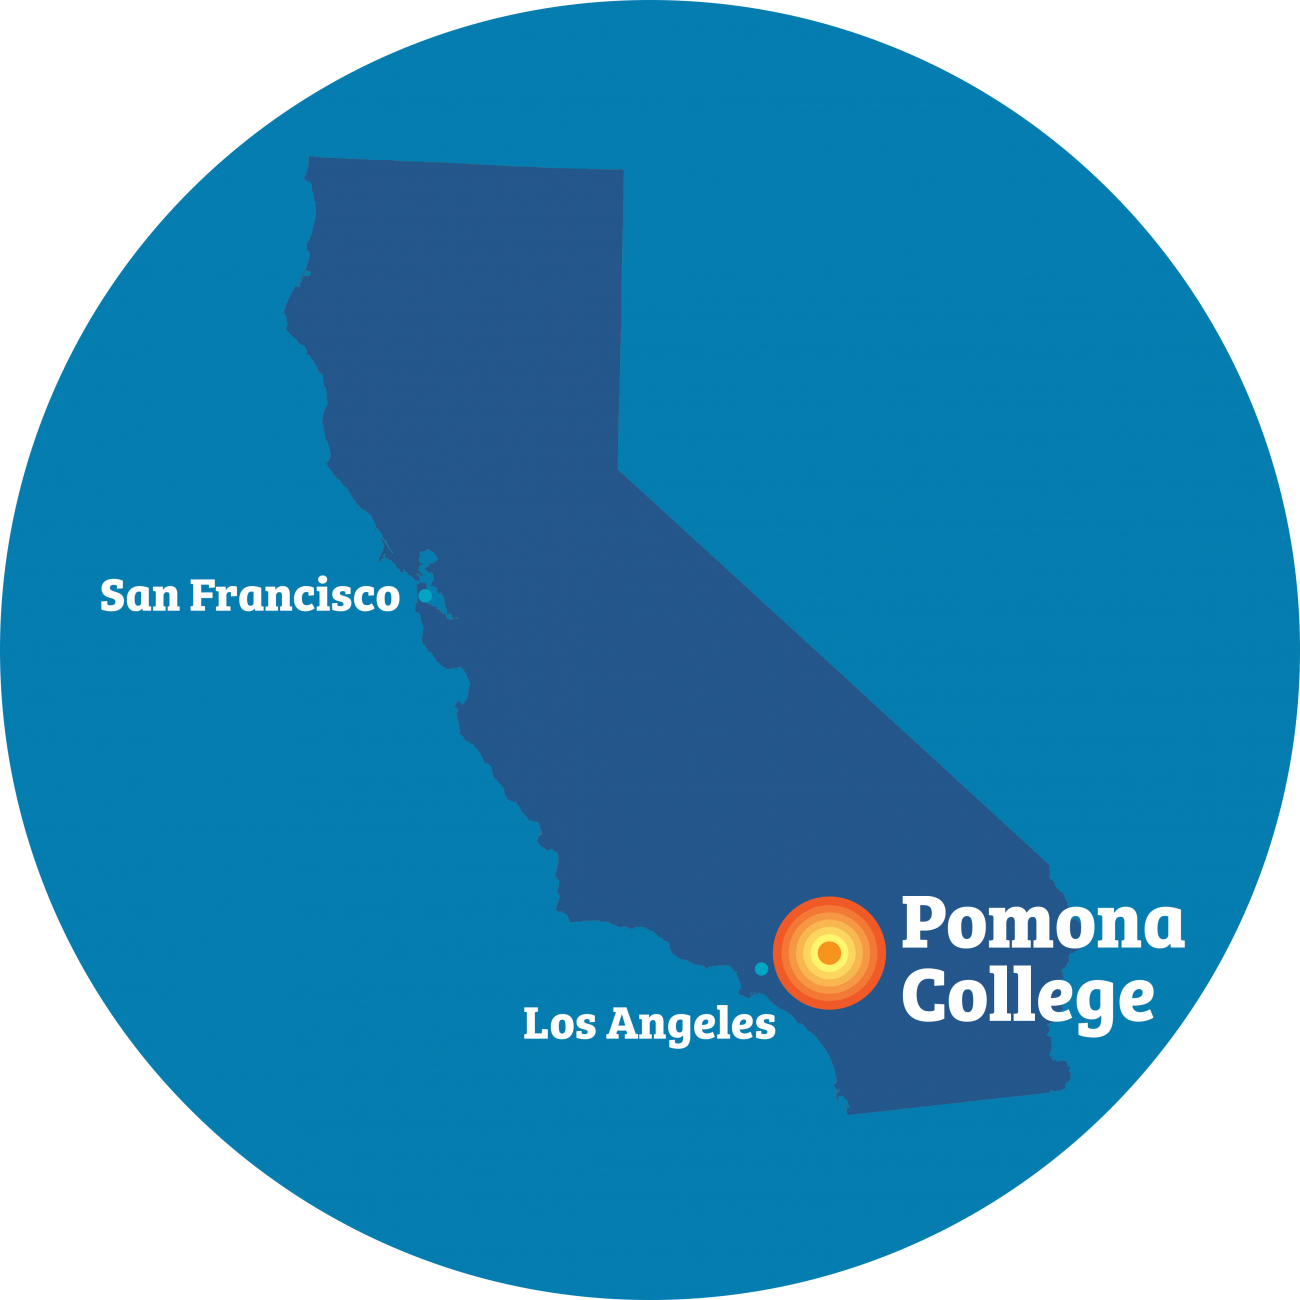 san francisco, los angeles, pomona college in California